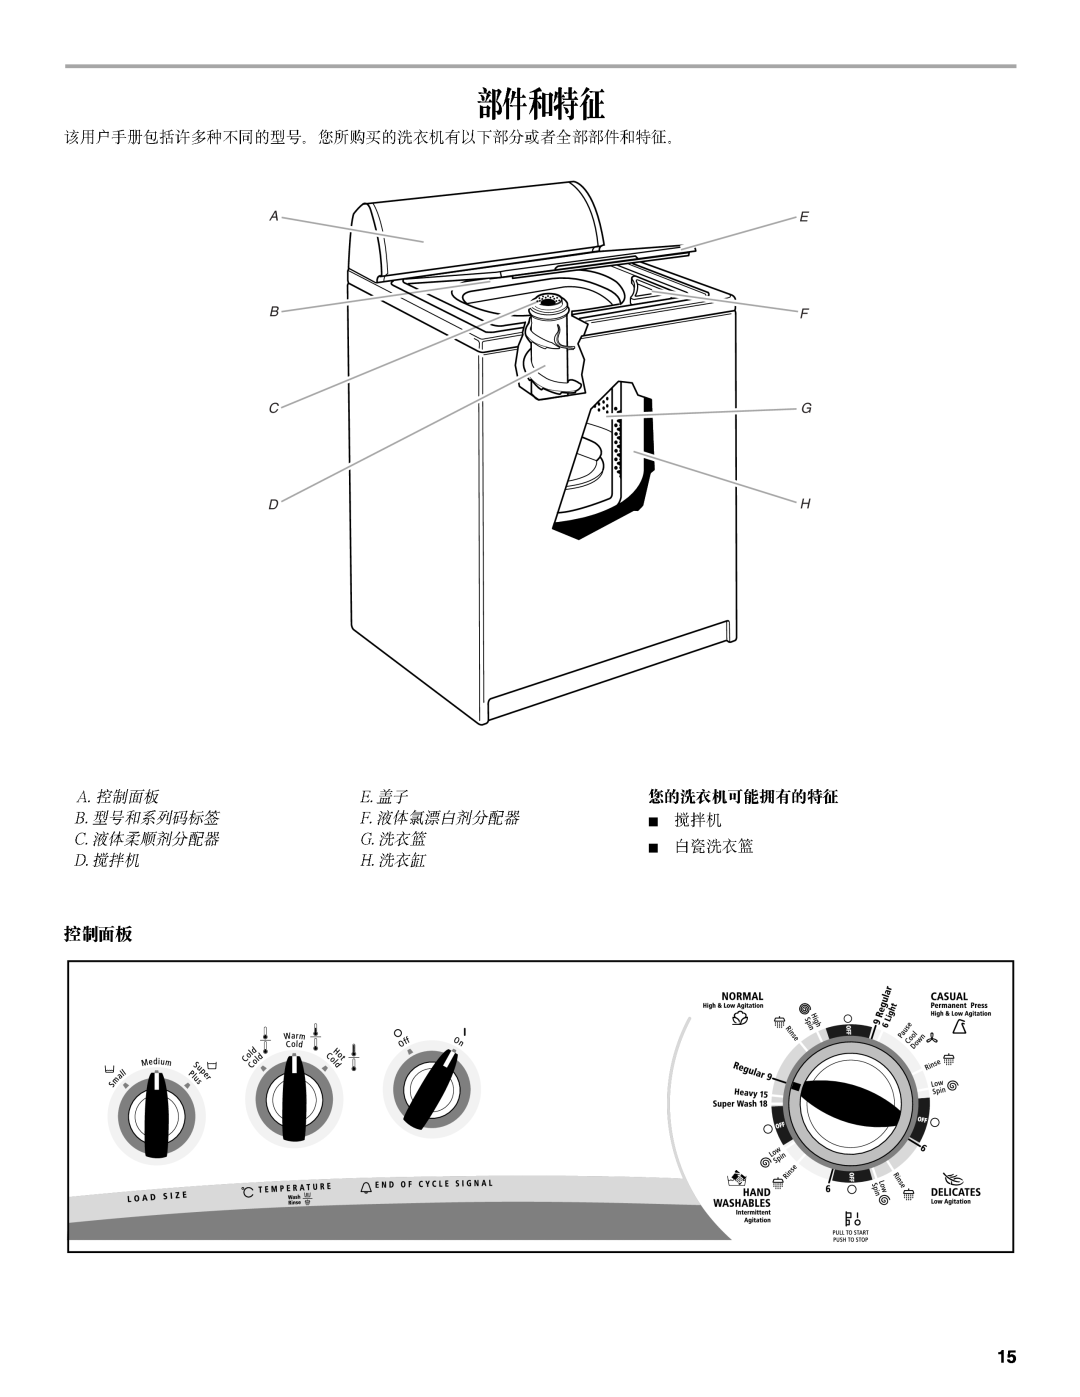 Whirlpool Compact Washe manual A E B F Cg Dh 